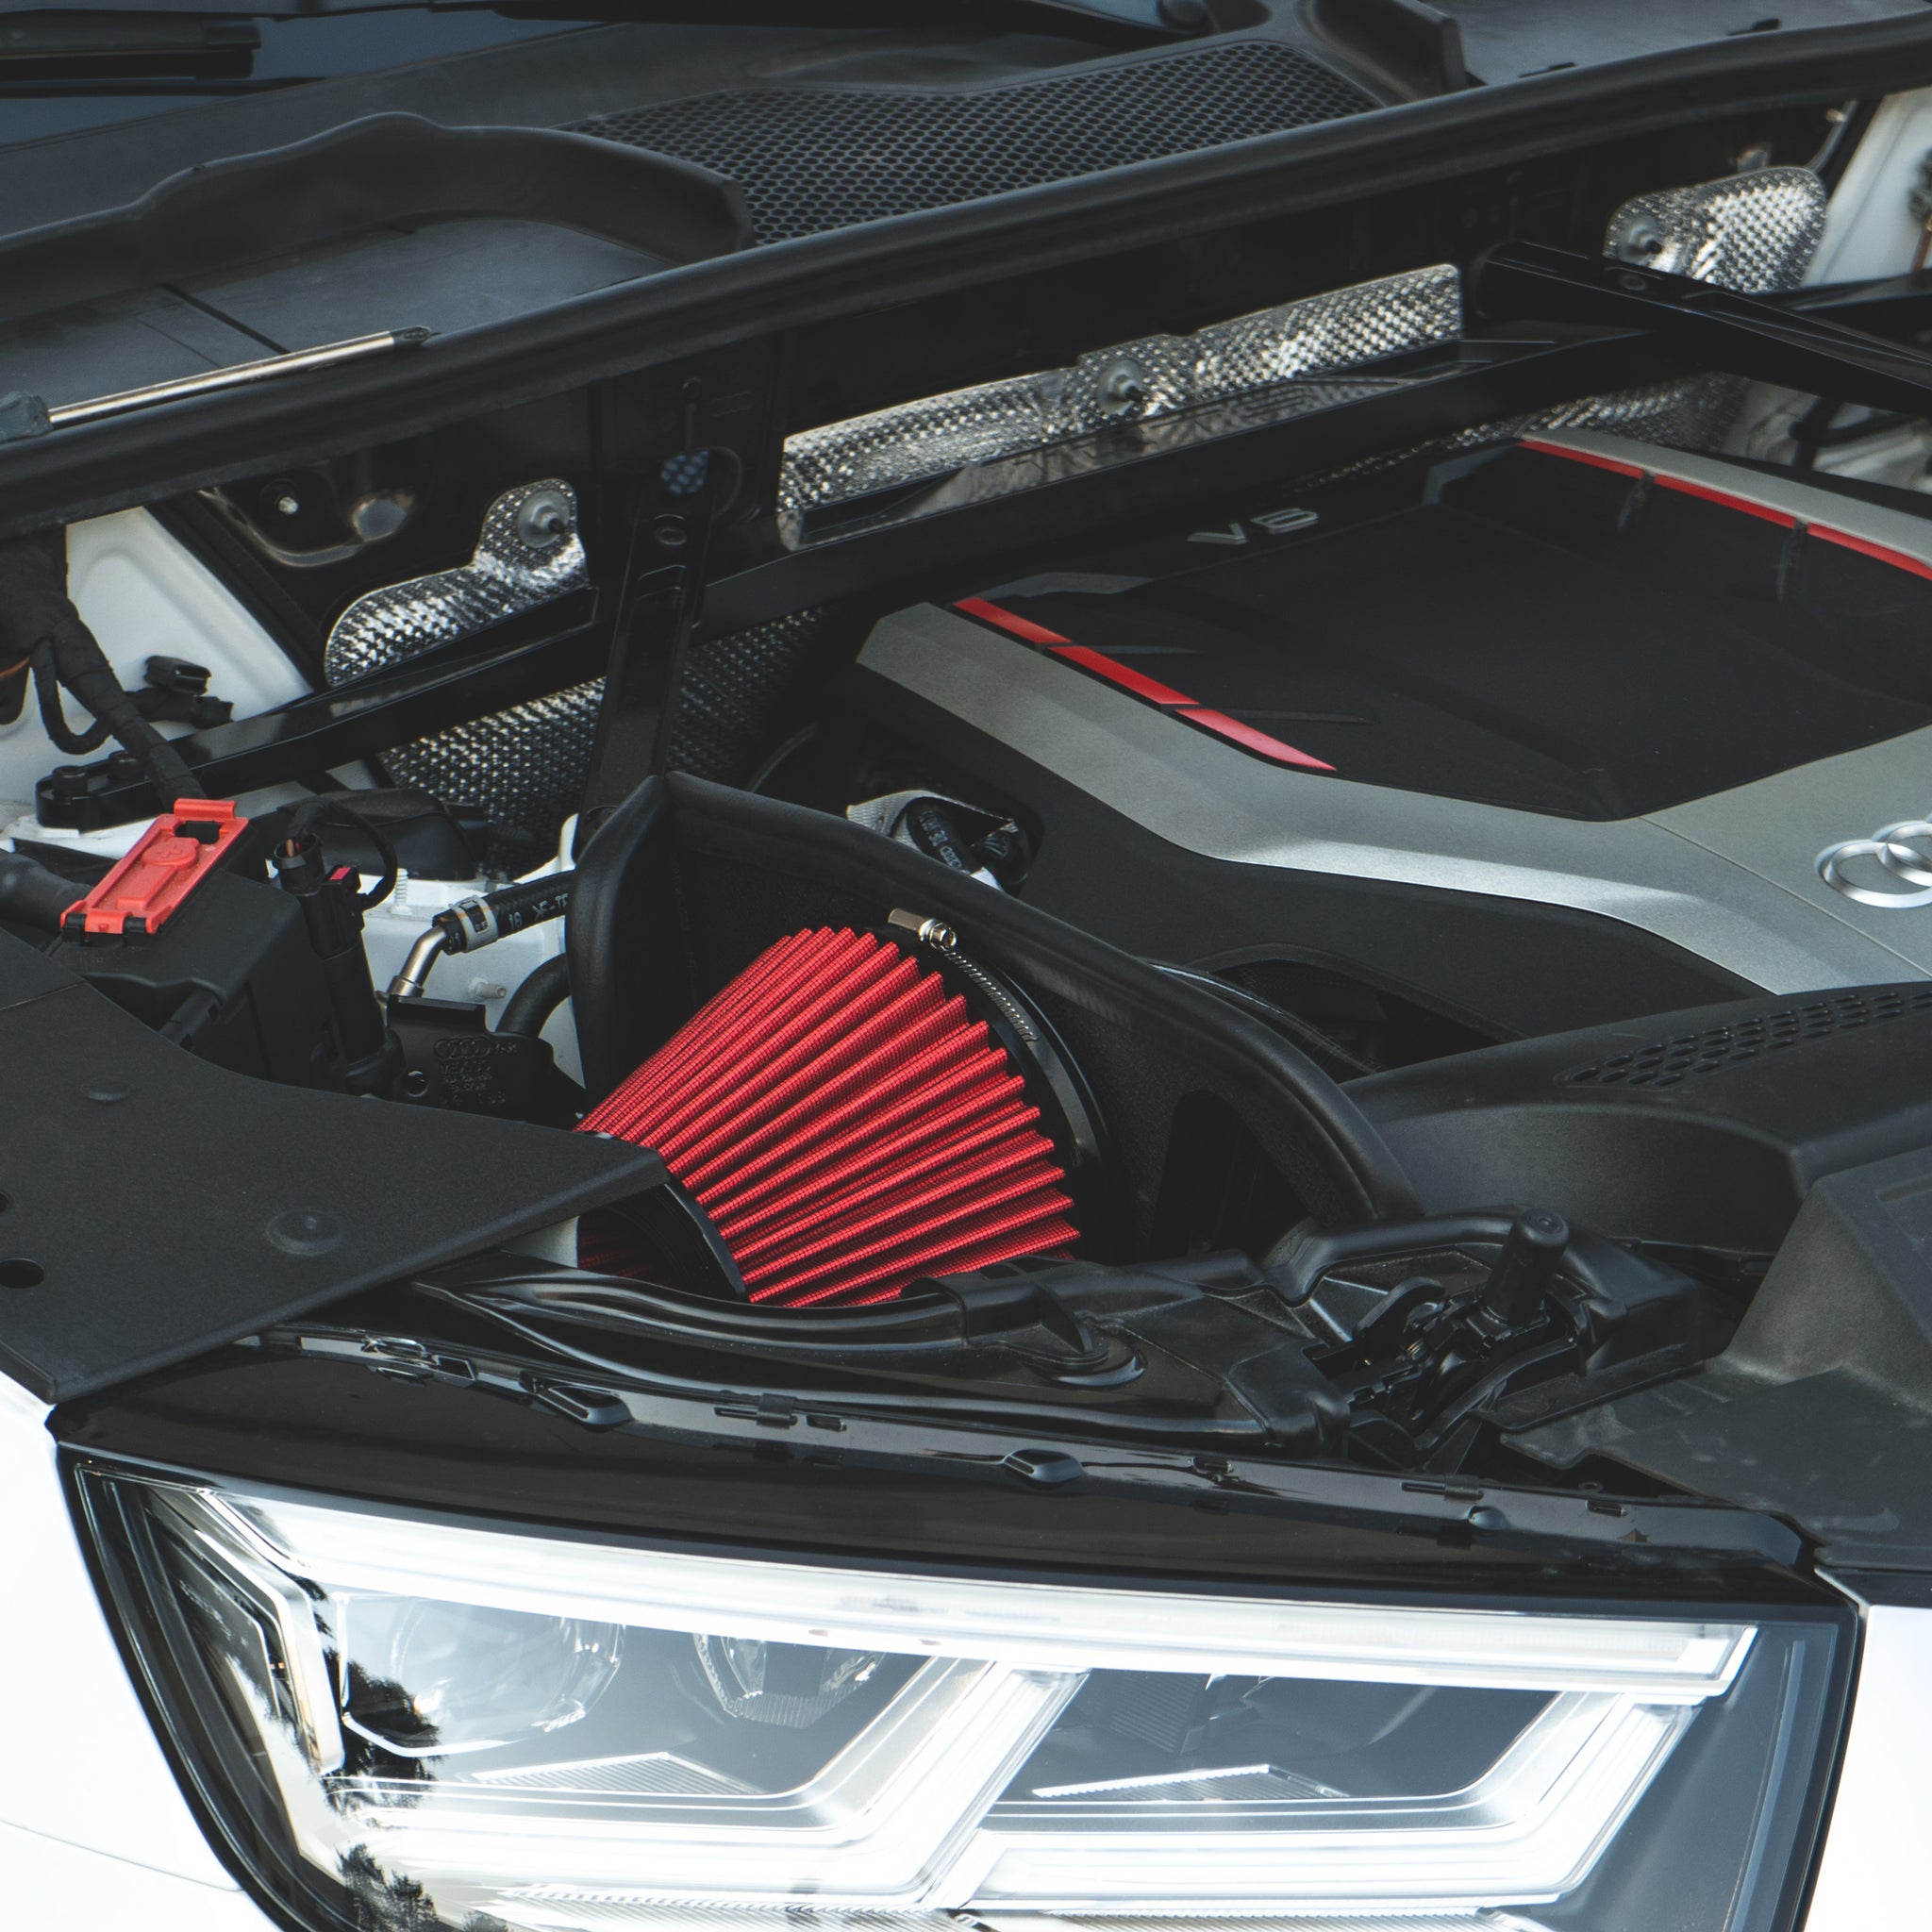 CTS Turbo Audi B9 SQ5 High-Flow Intake - 6 Velocity Stack